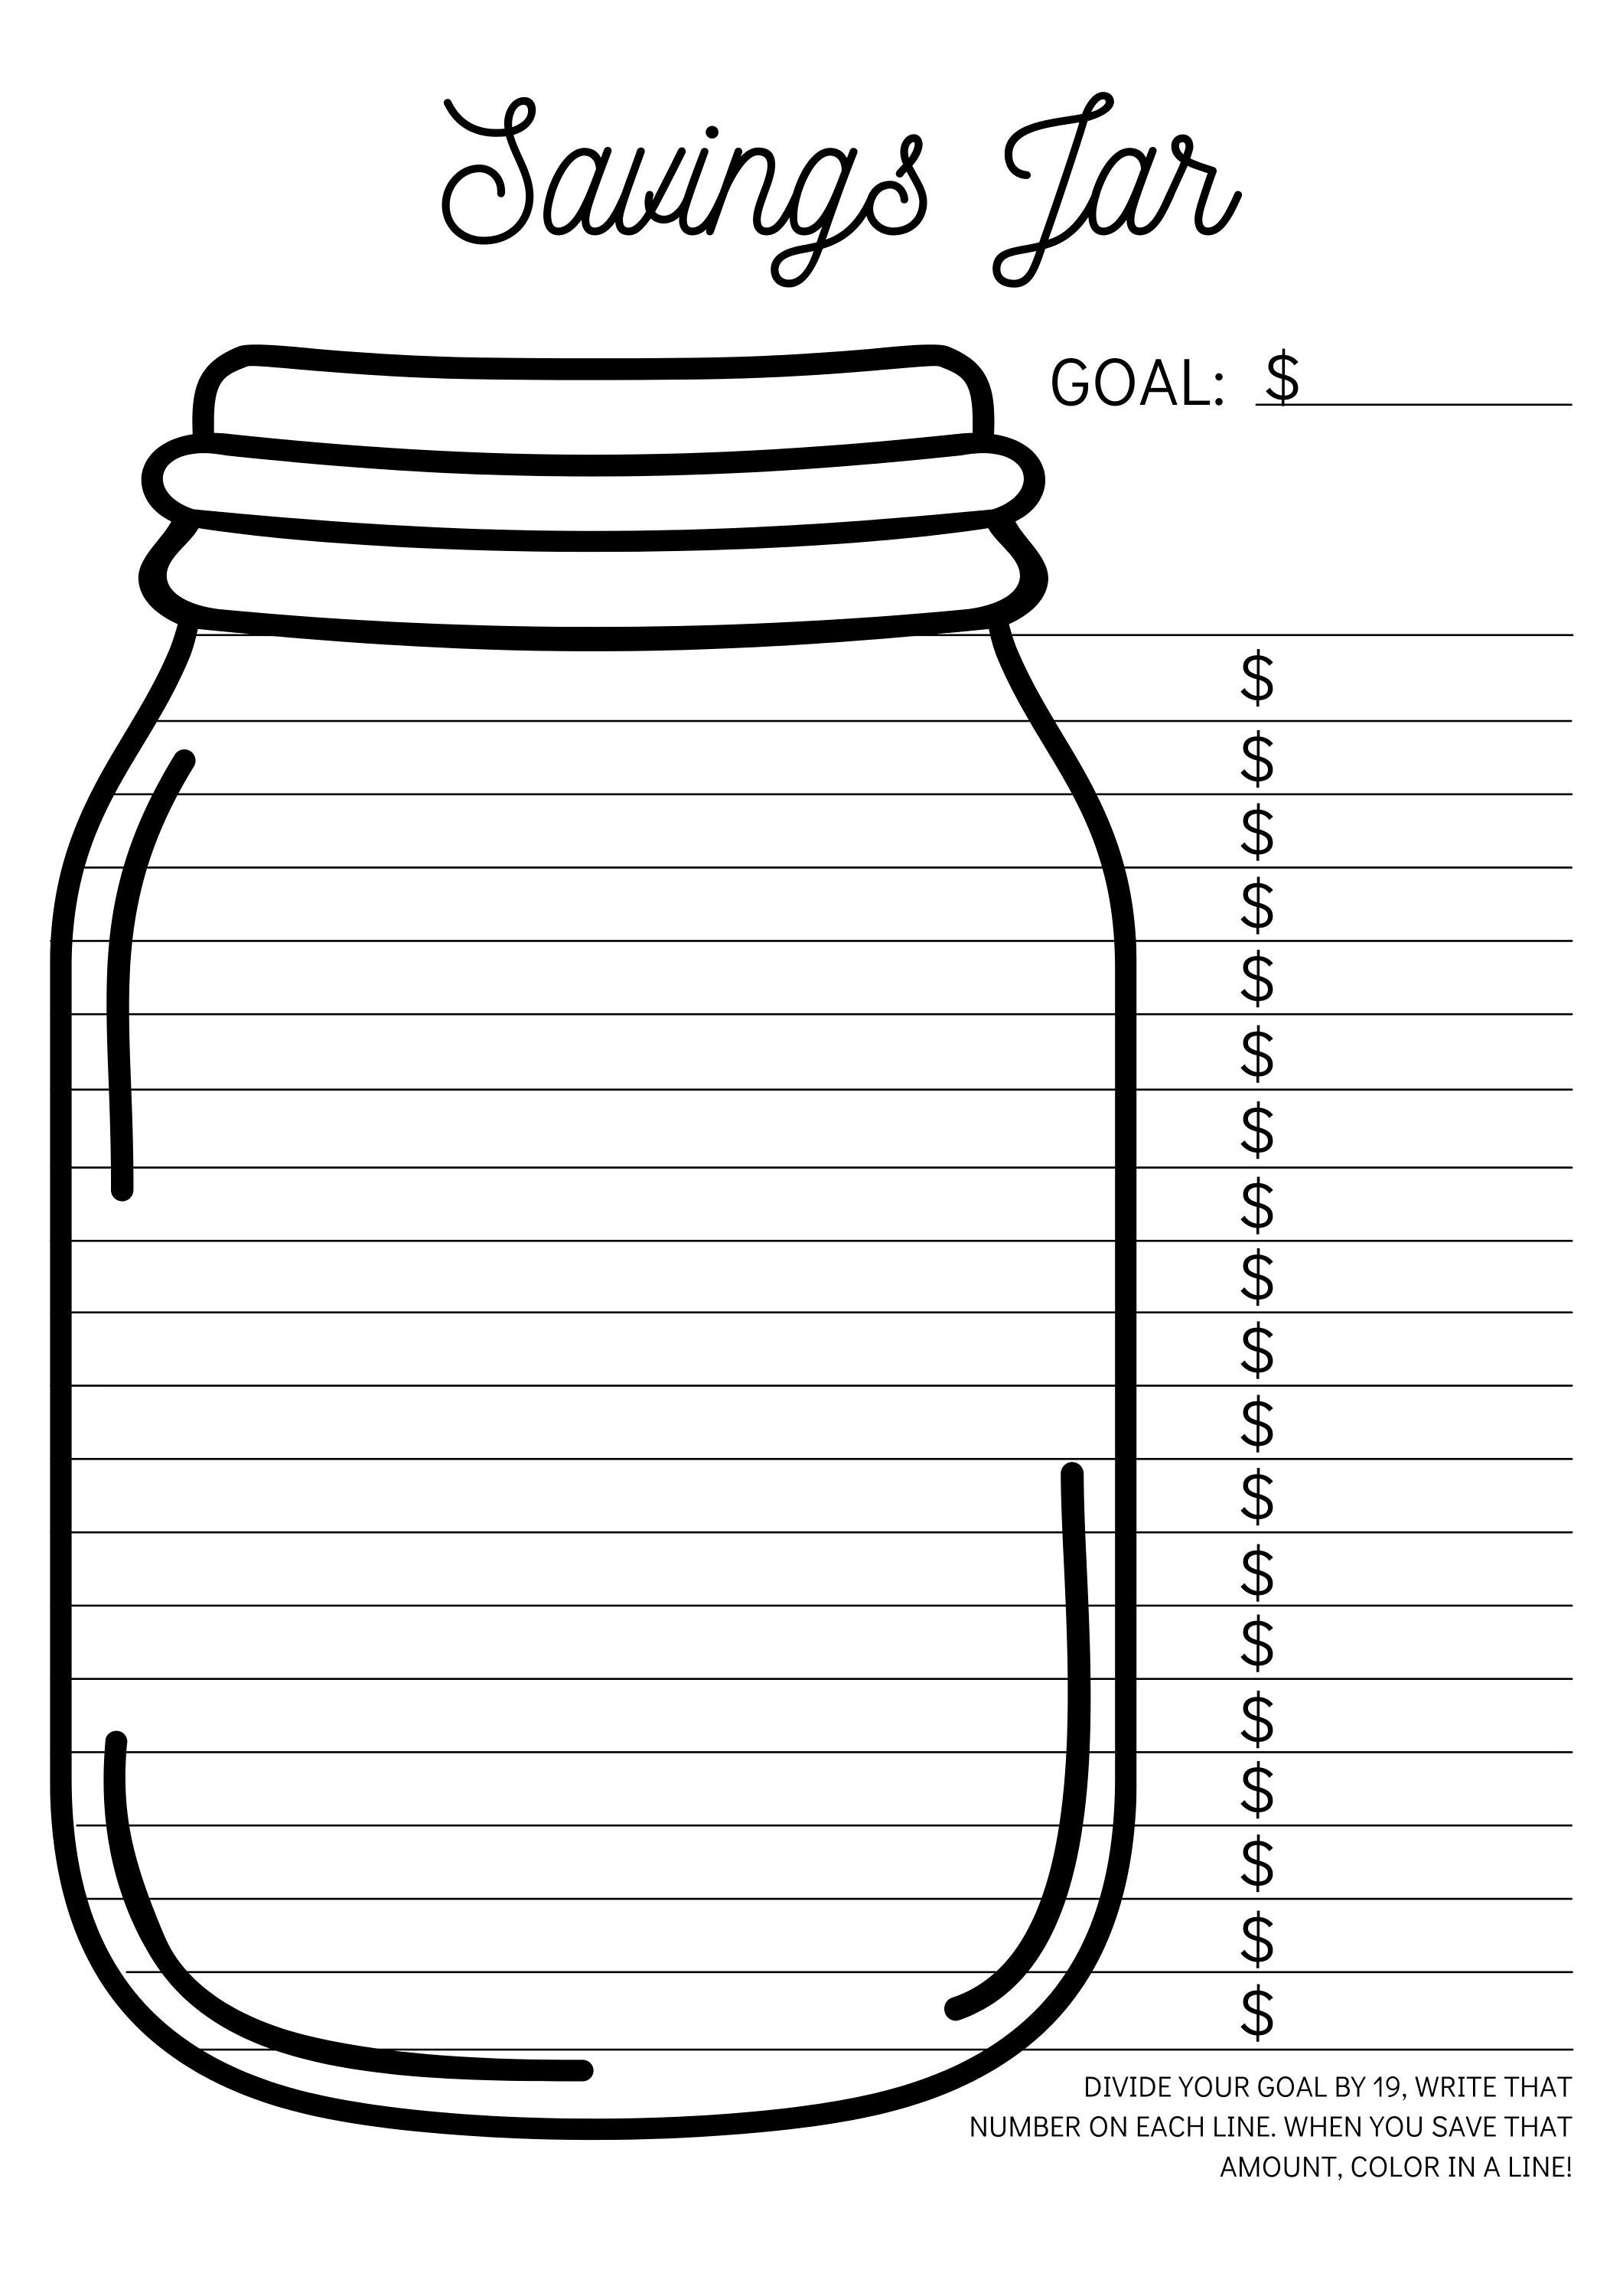 Savings tracker instant download savings jar